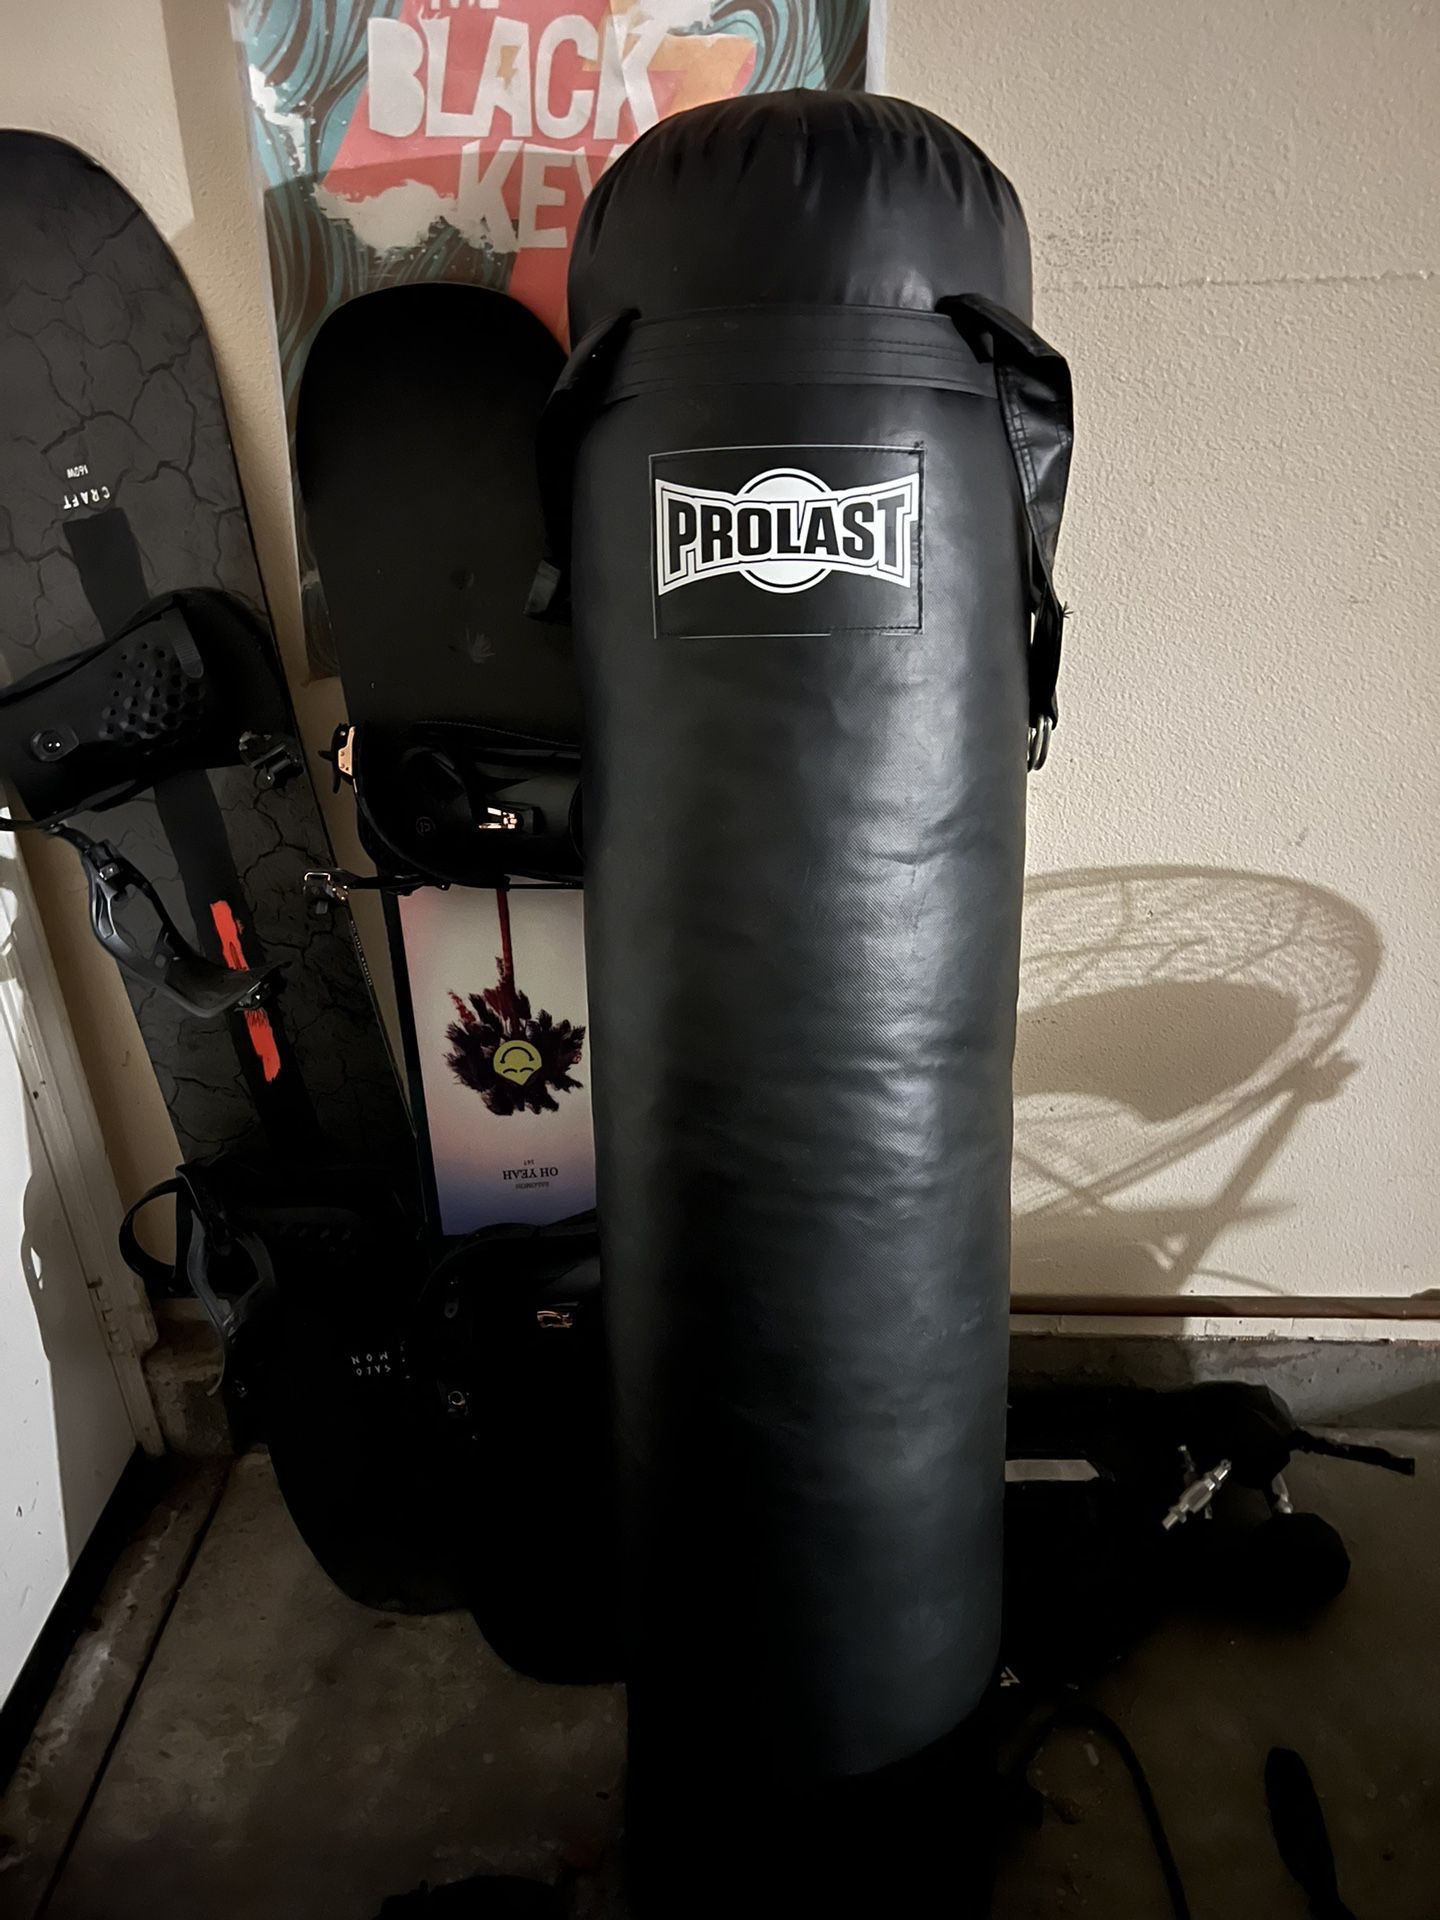 Prolast Boxing Punching Bag